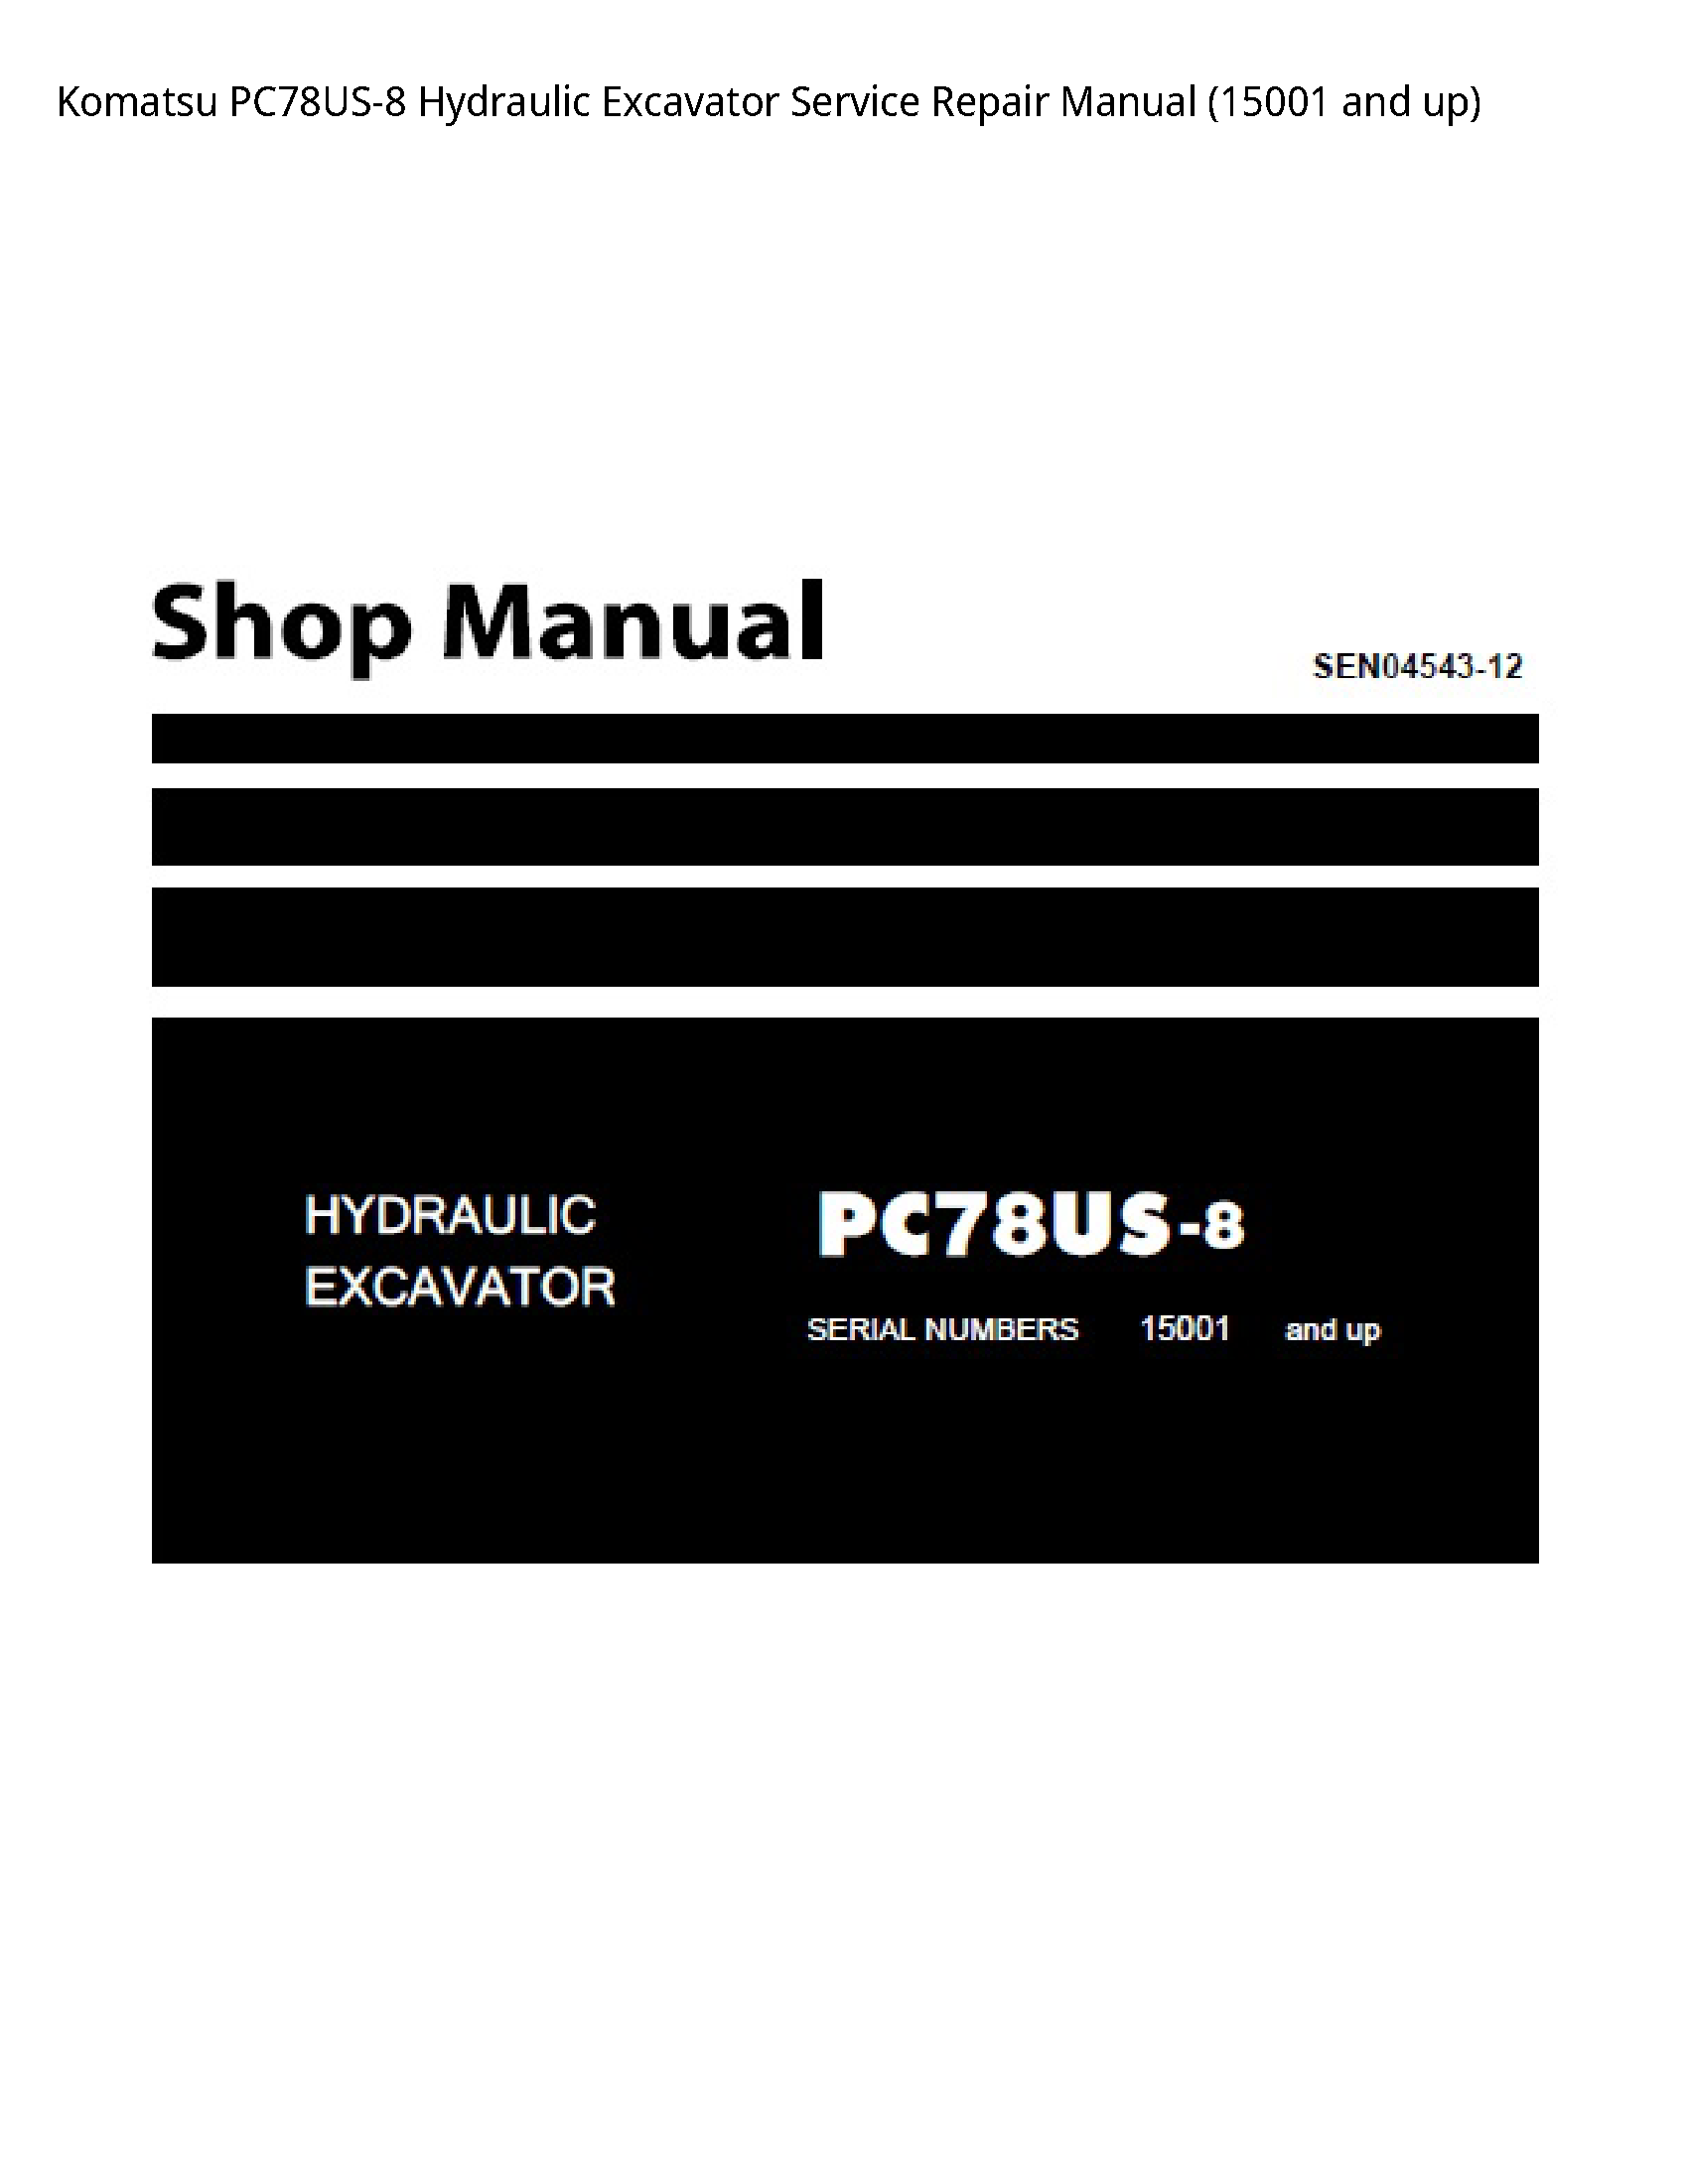 KOMATSU PC78US-8 Hydraulic Excavator manual